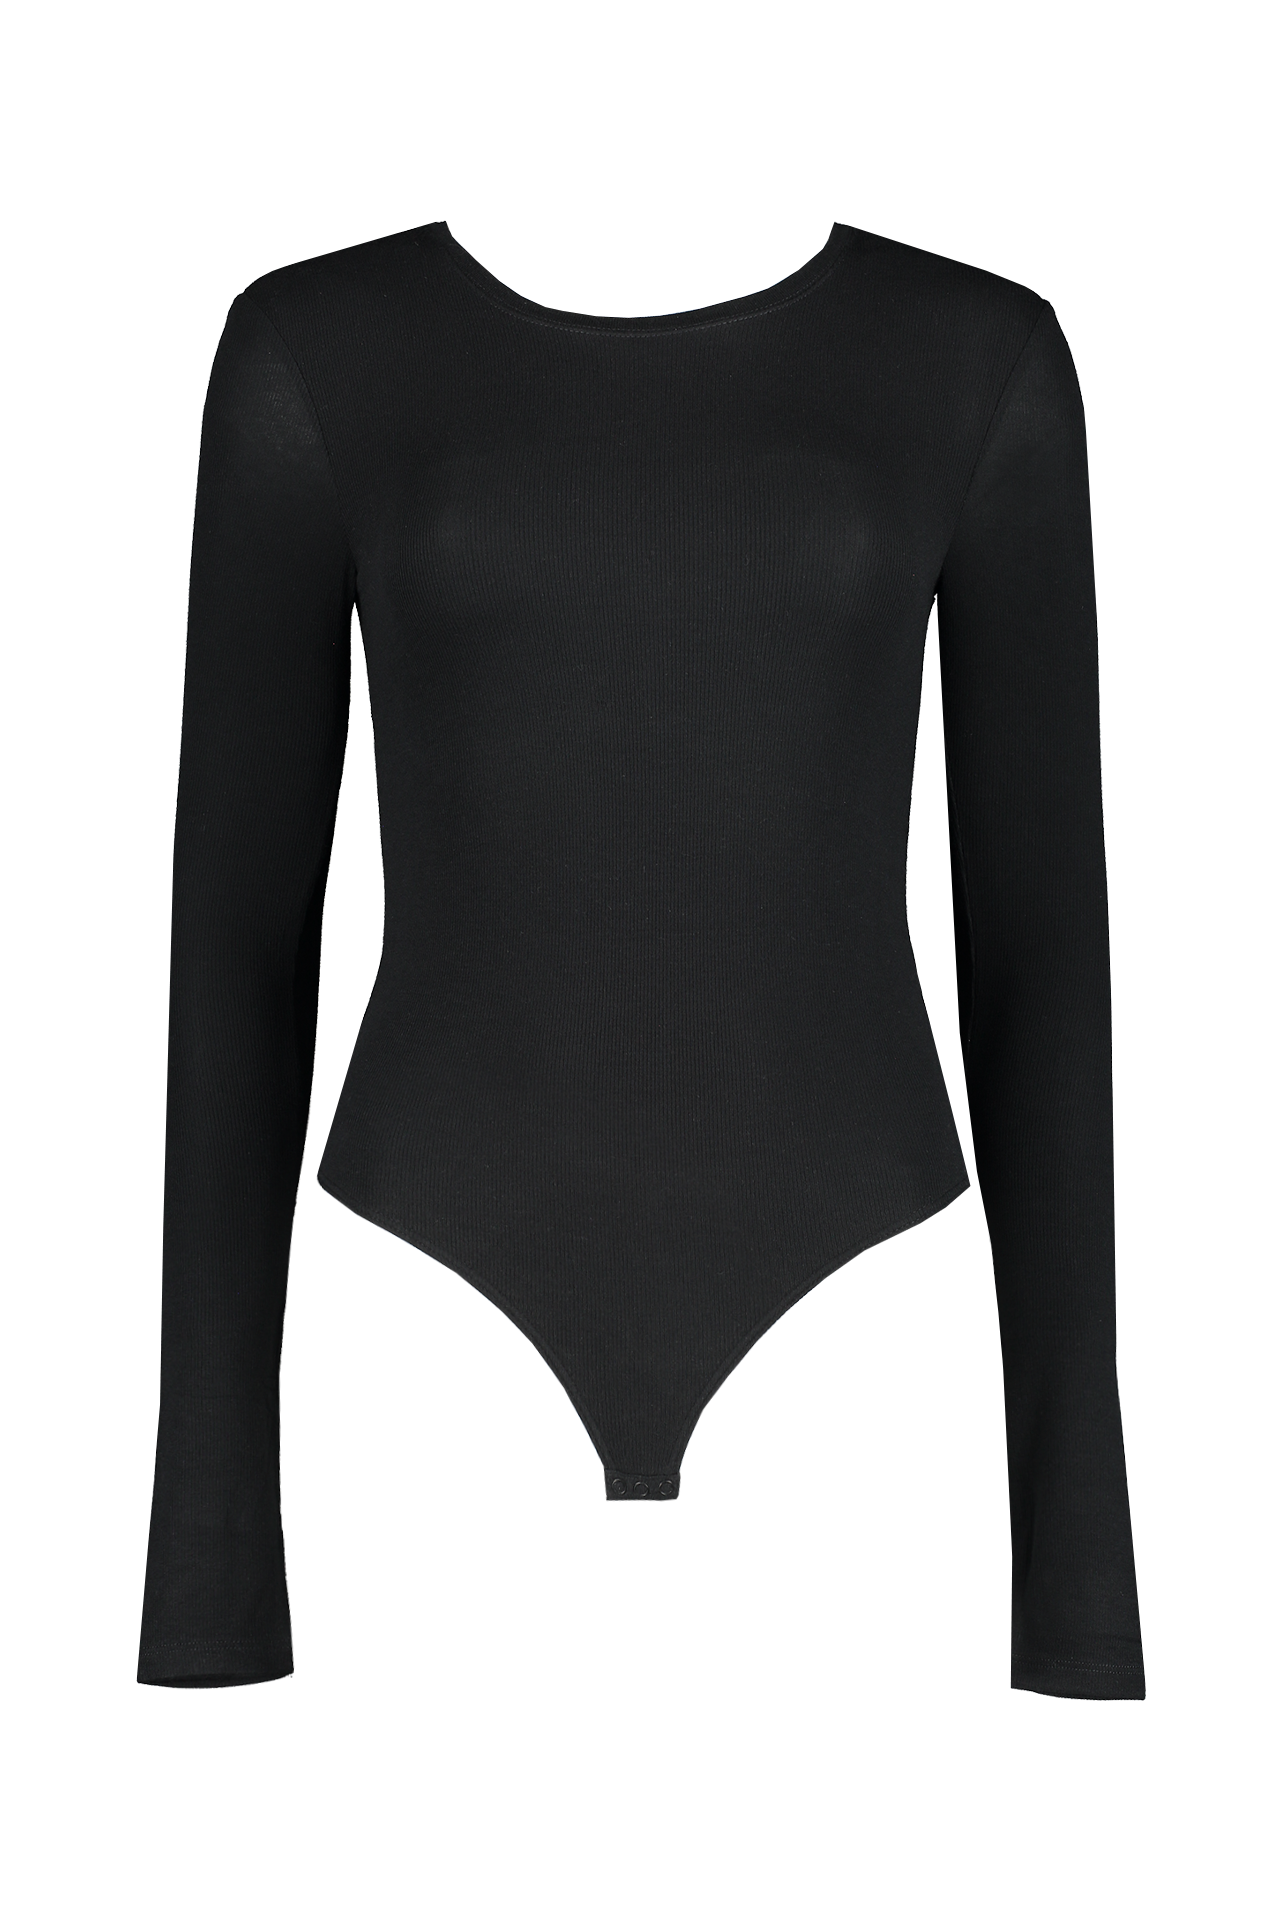 ATM Long Sleeve Bodysuit Black Front Mannequin Image (6706403475571)